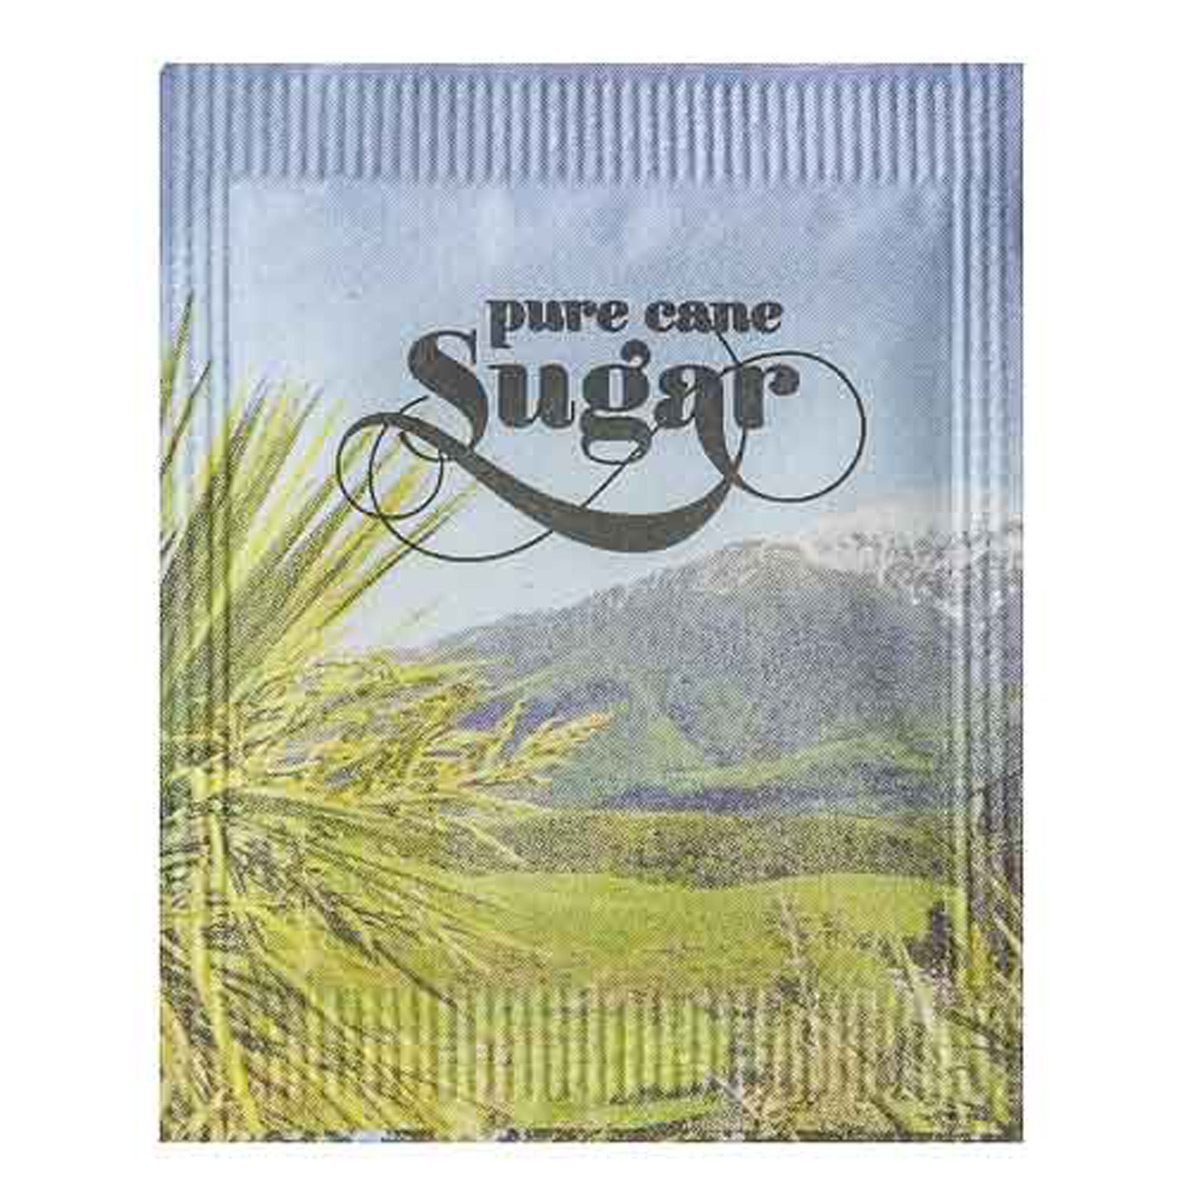 consumables-hospitality-beverage-food-pure-cane-sugar-white-sugar-sachets-x2000-1-teaspoon-pure-white-highest-grade-refined-sugar-each-box-contains-a-mixture-sachets-NZ-photo-images-vjs-distributors-HPS